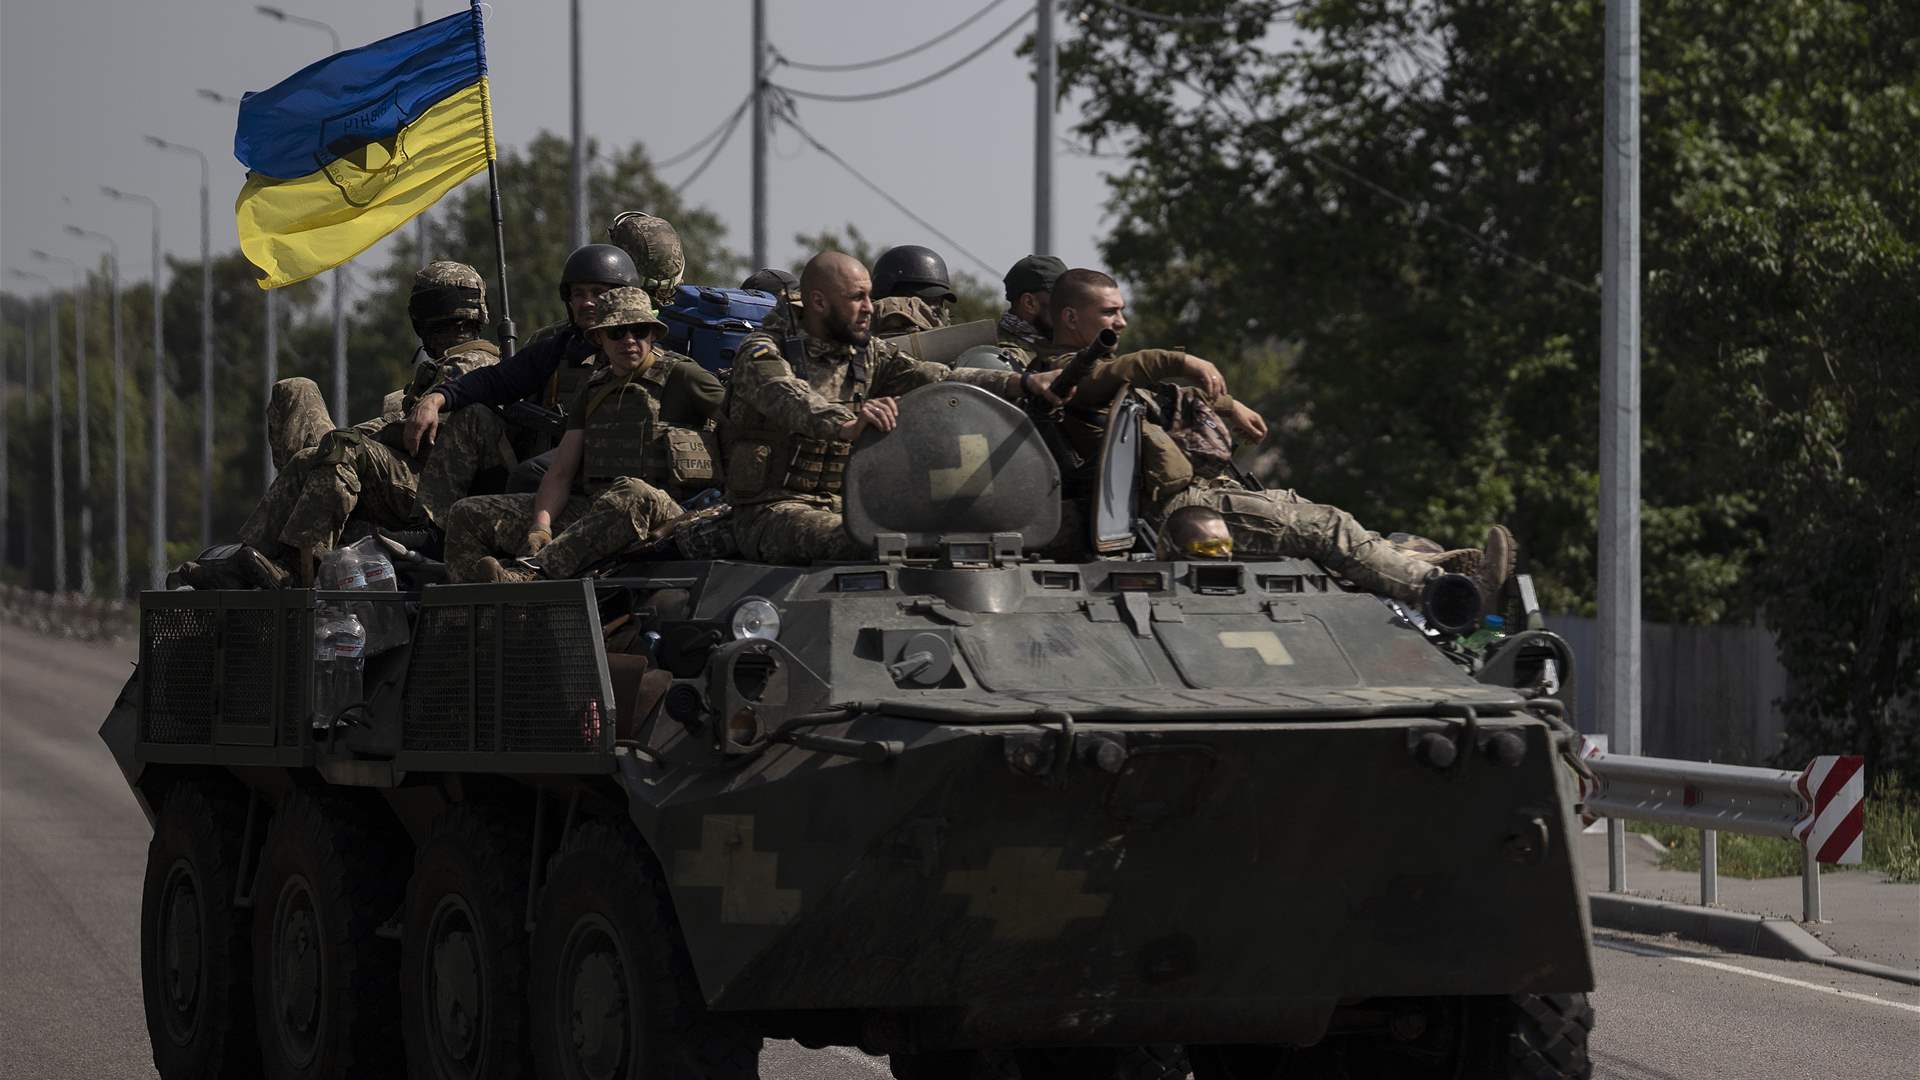 Ukraine forces recapture new Russian-occupied settlement